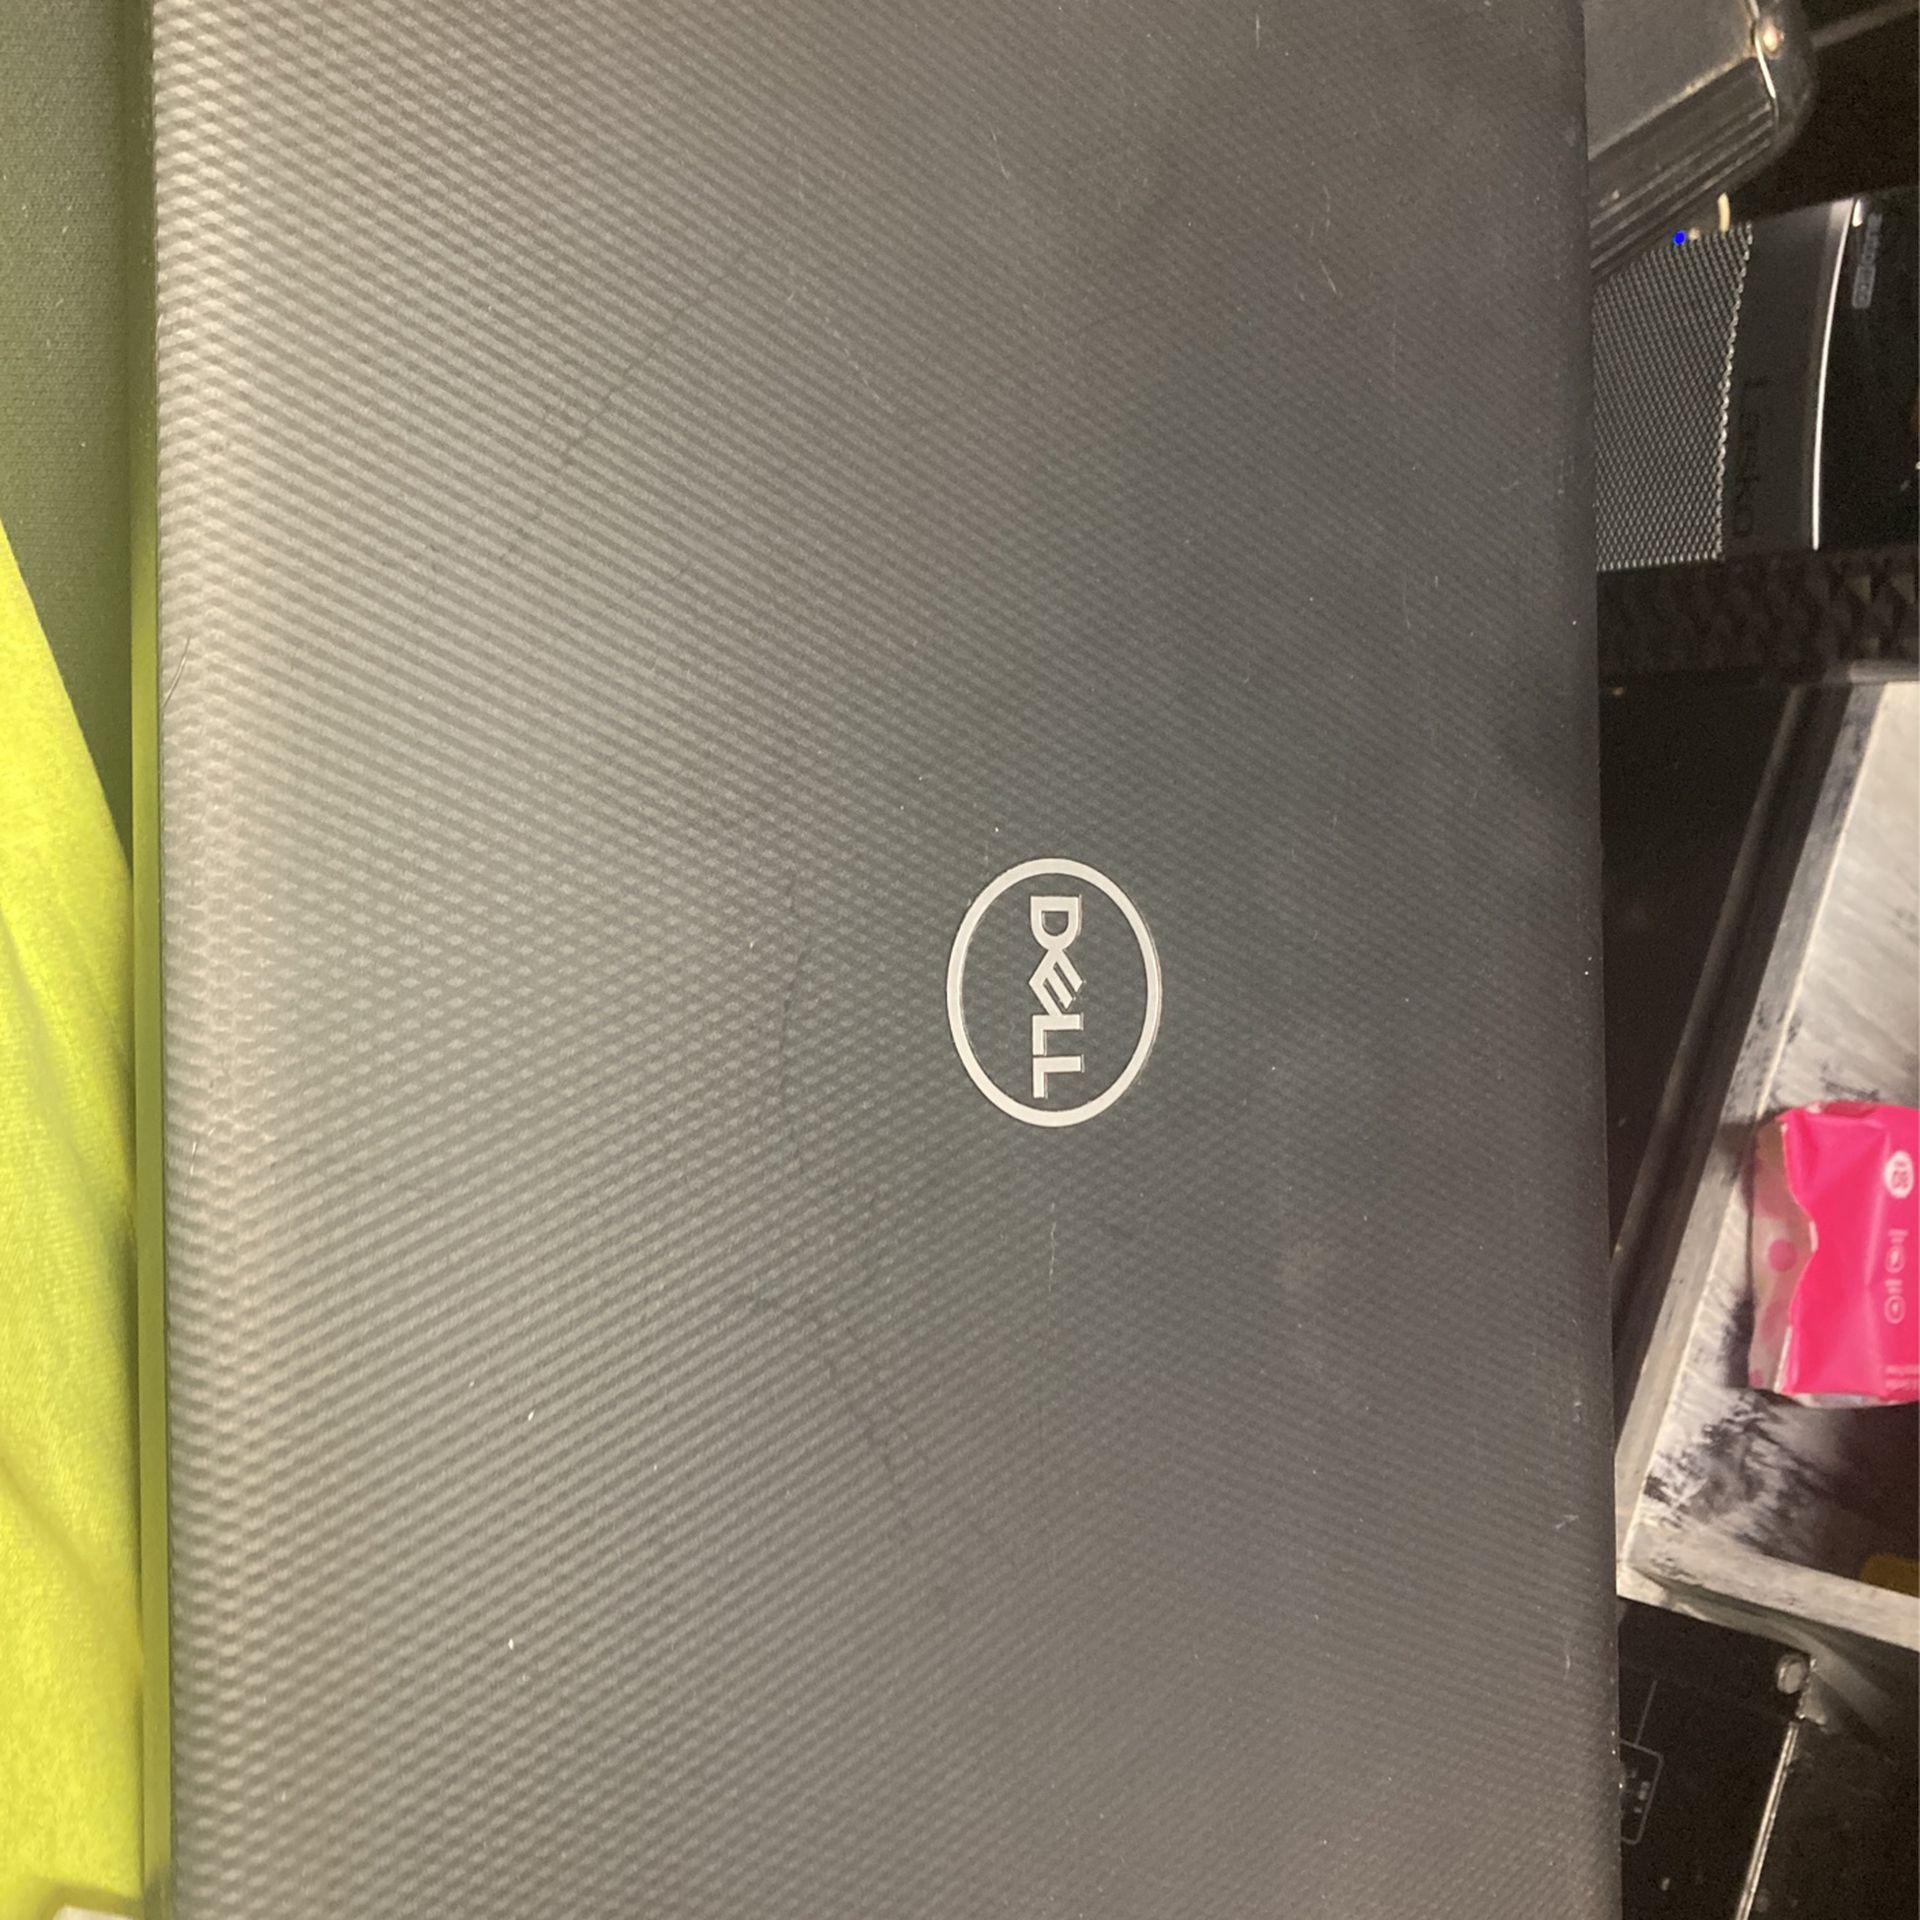 Dell Inspiron 3583 15” Laptop